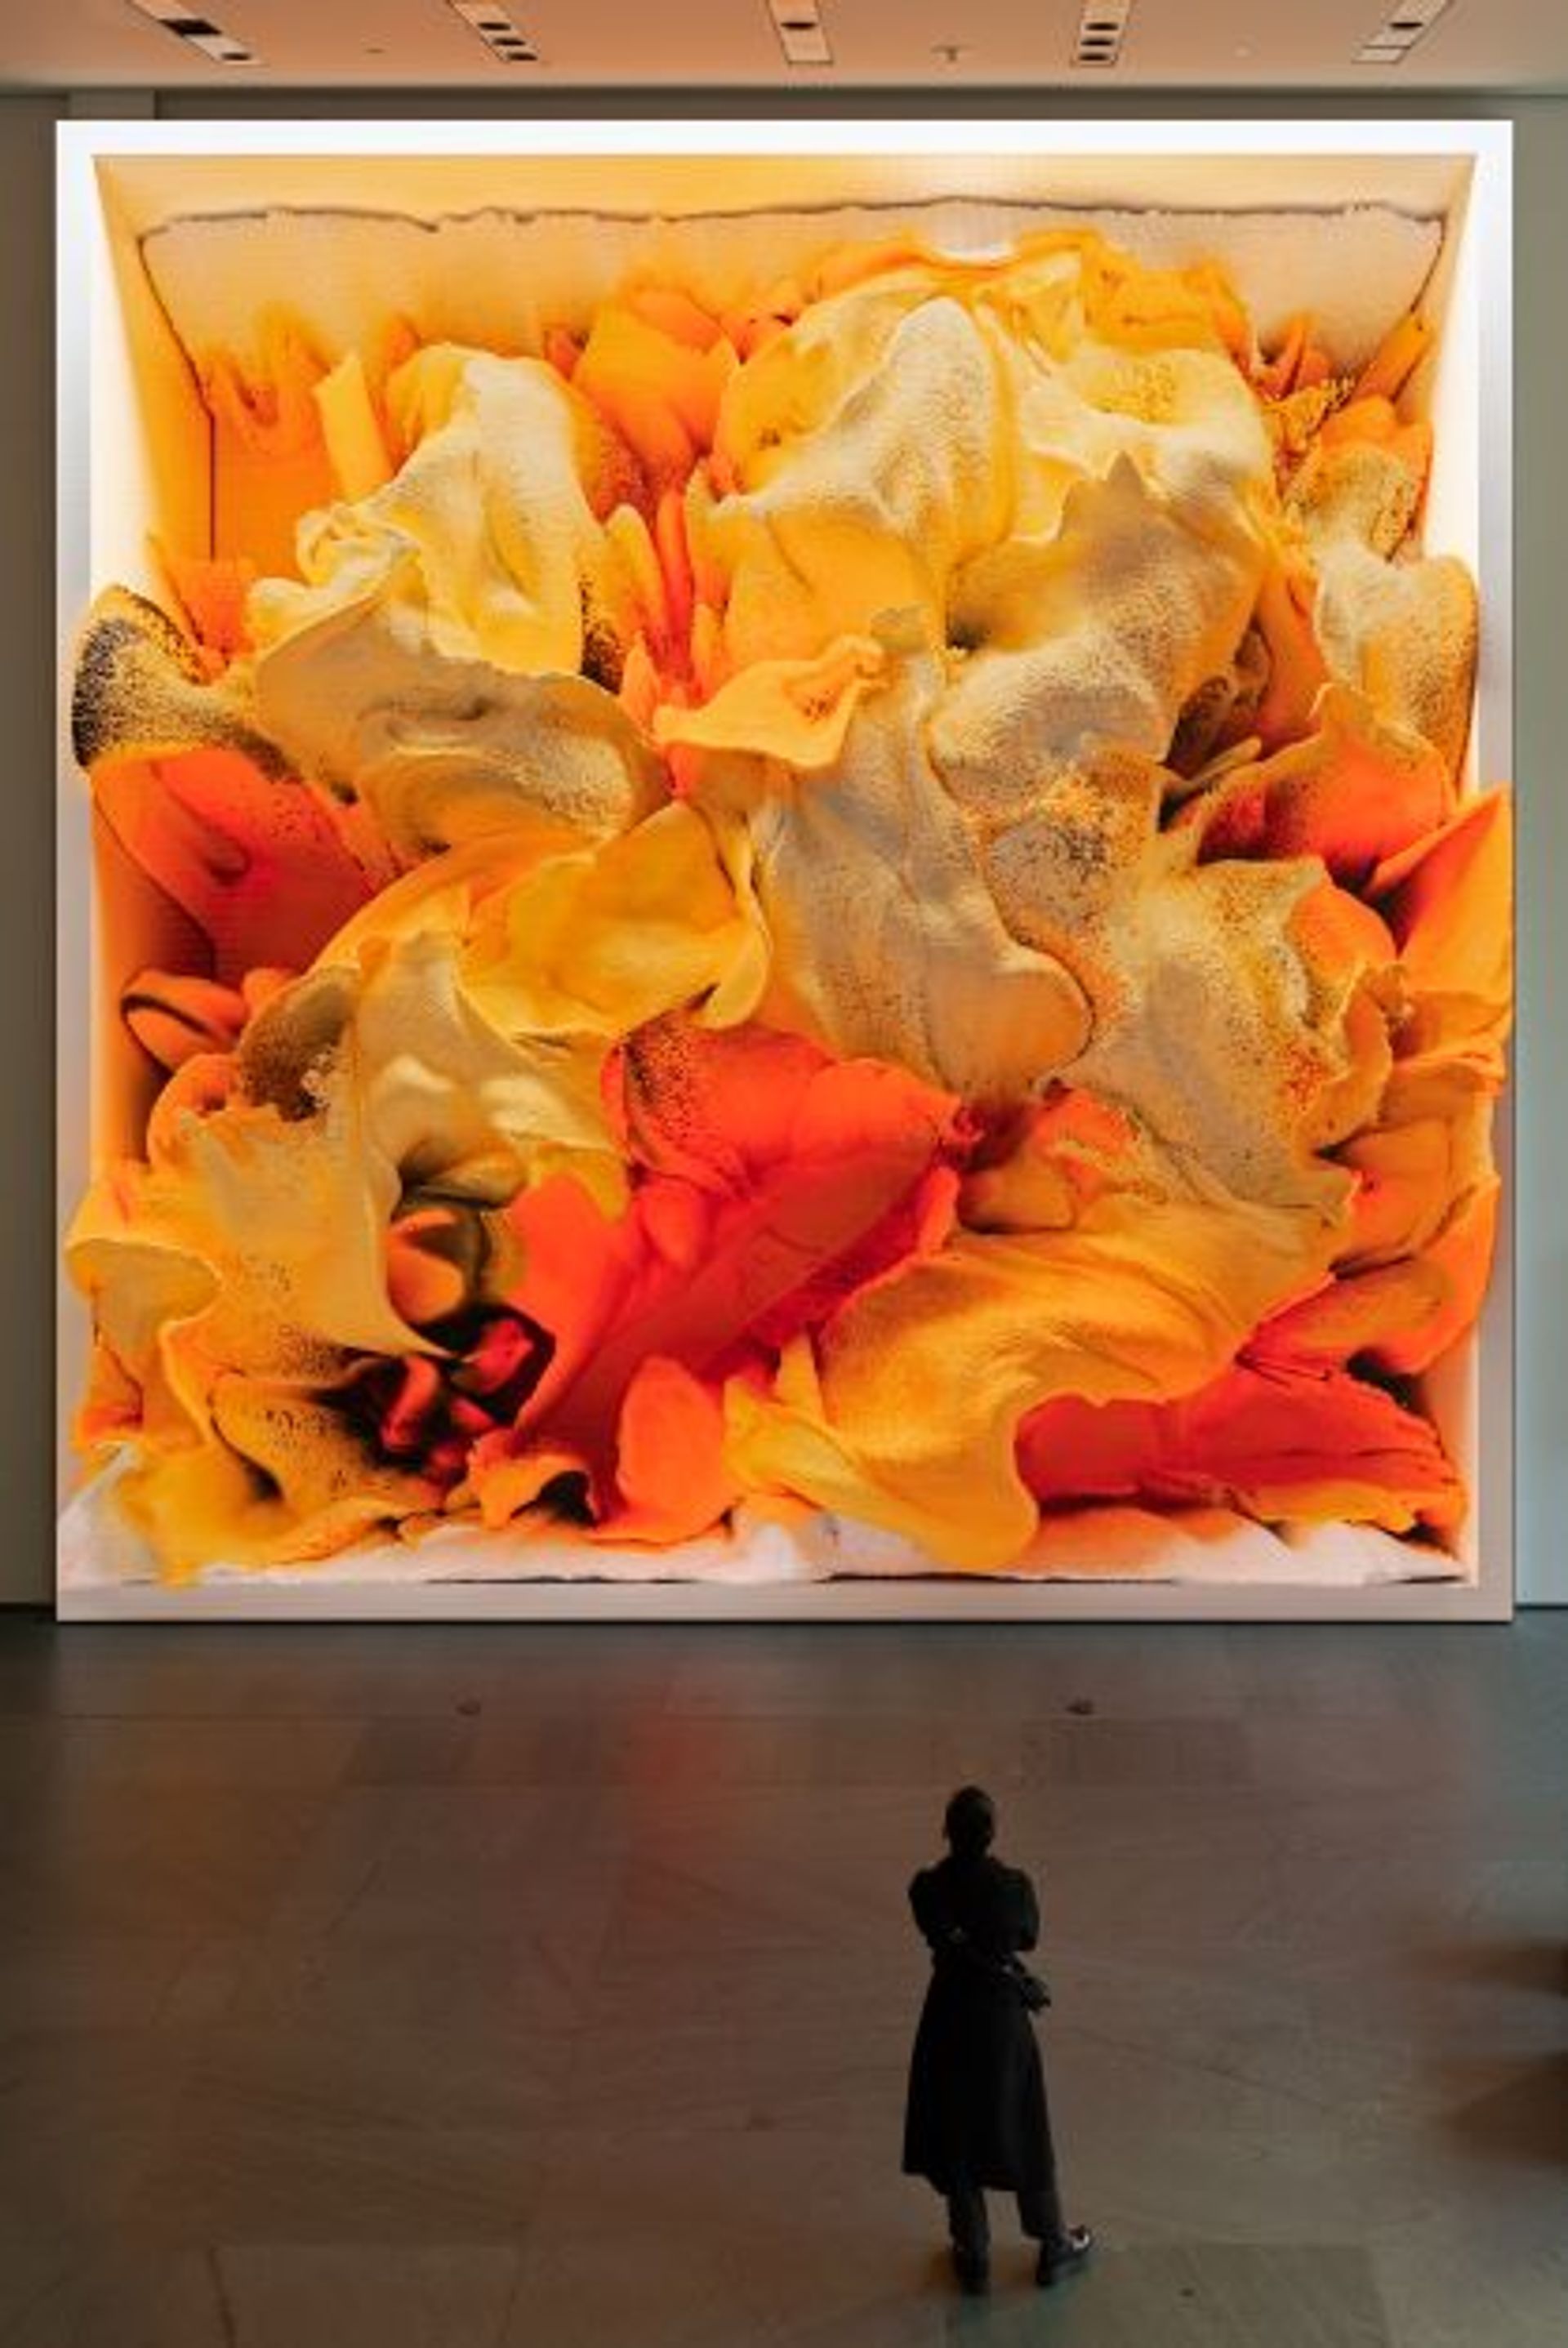 Vue de l’installation Unsupervised de Refik Anadol, The Museum of Modern Art, New York, 2022. 

© 2022 The Museum of Modern Art. Photo Robert Gerhardt